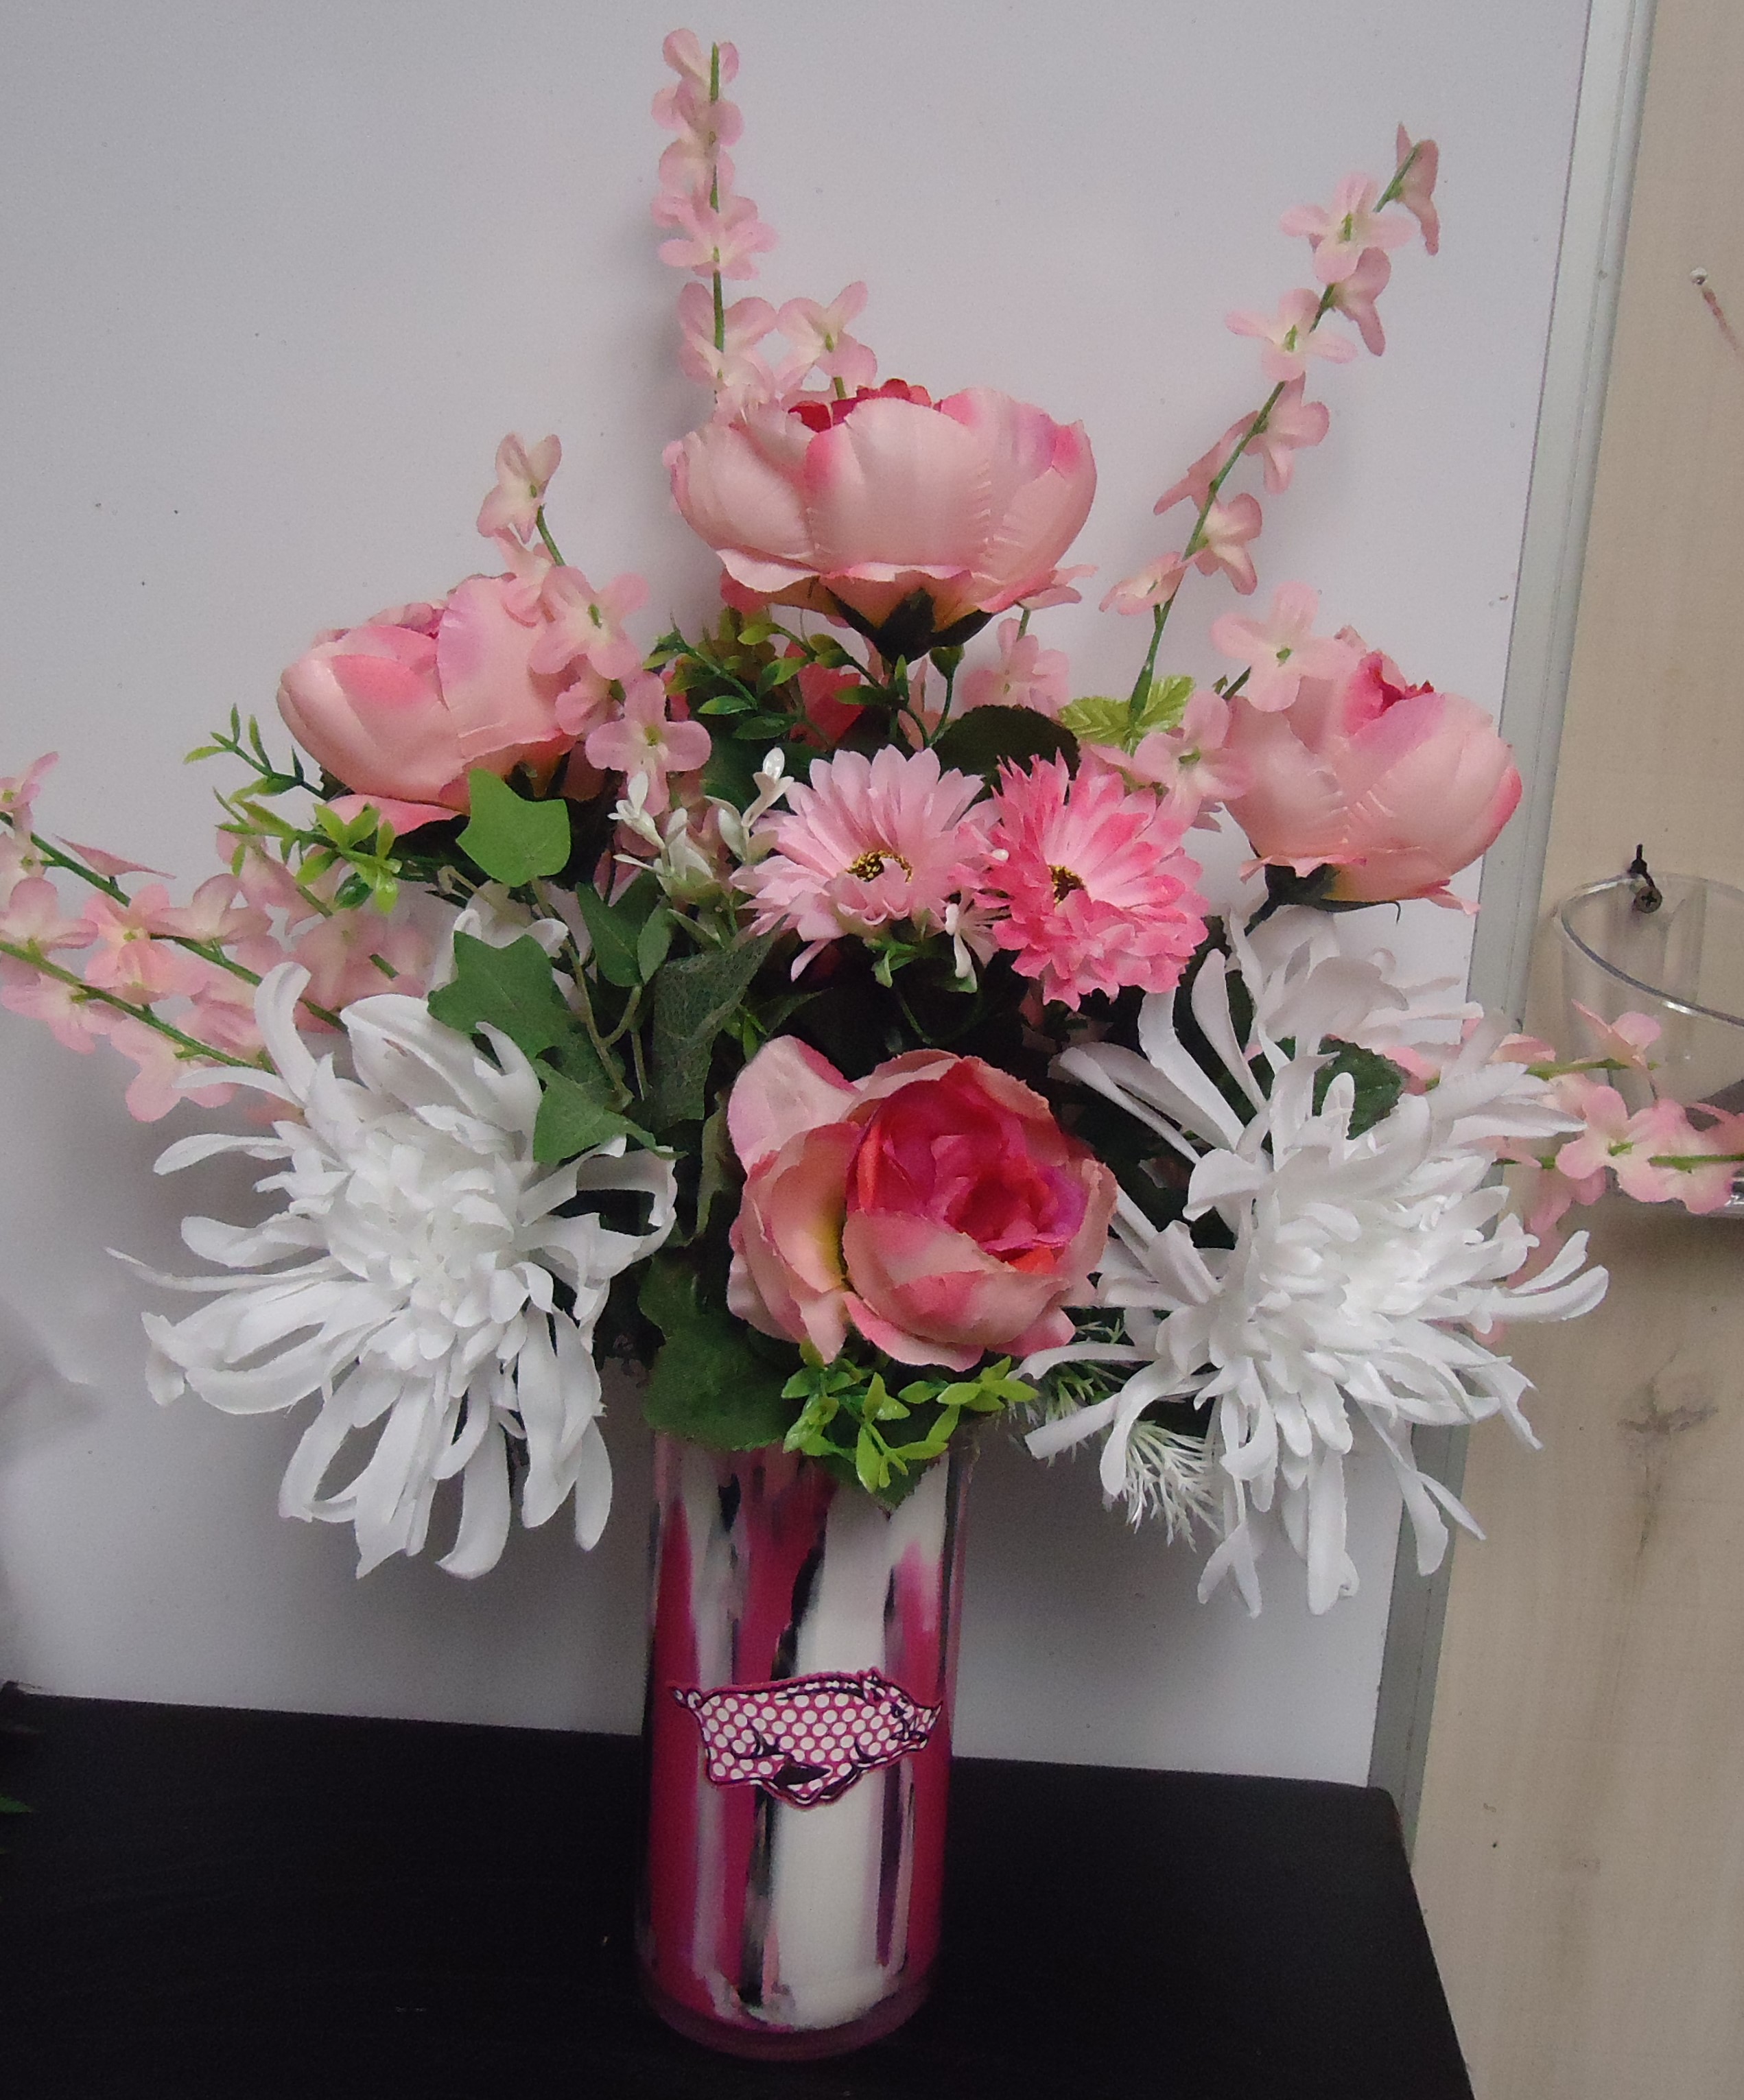 (4) "Silk" Razorback Vase
(Pinks & White)
$45.00